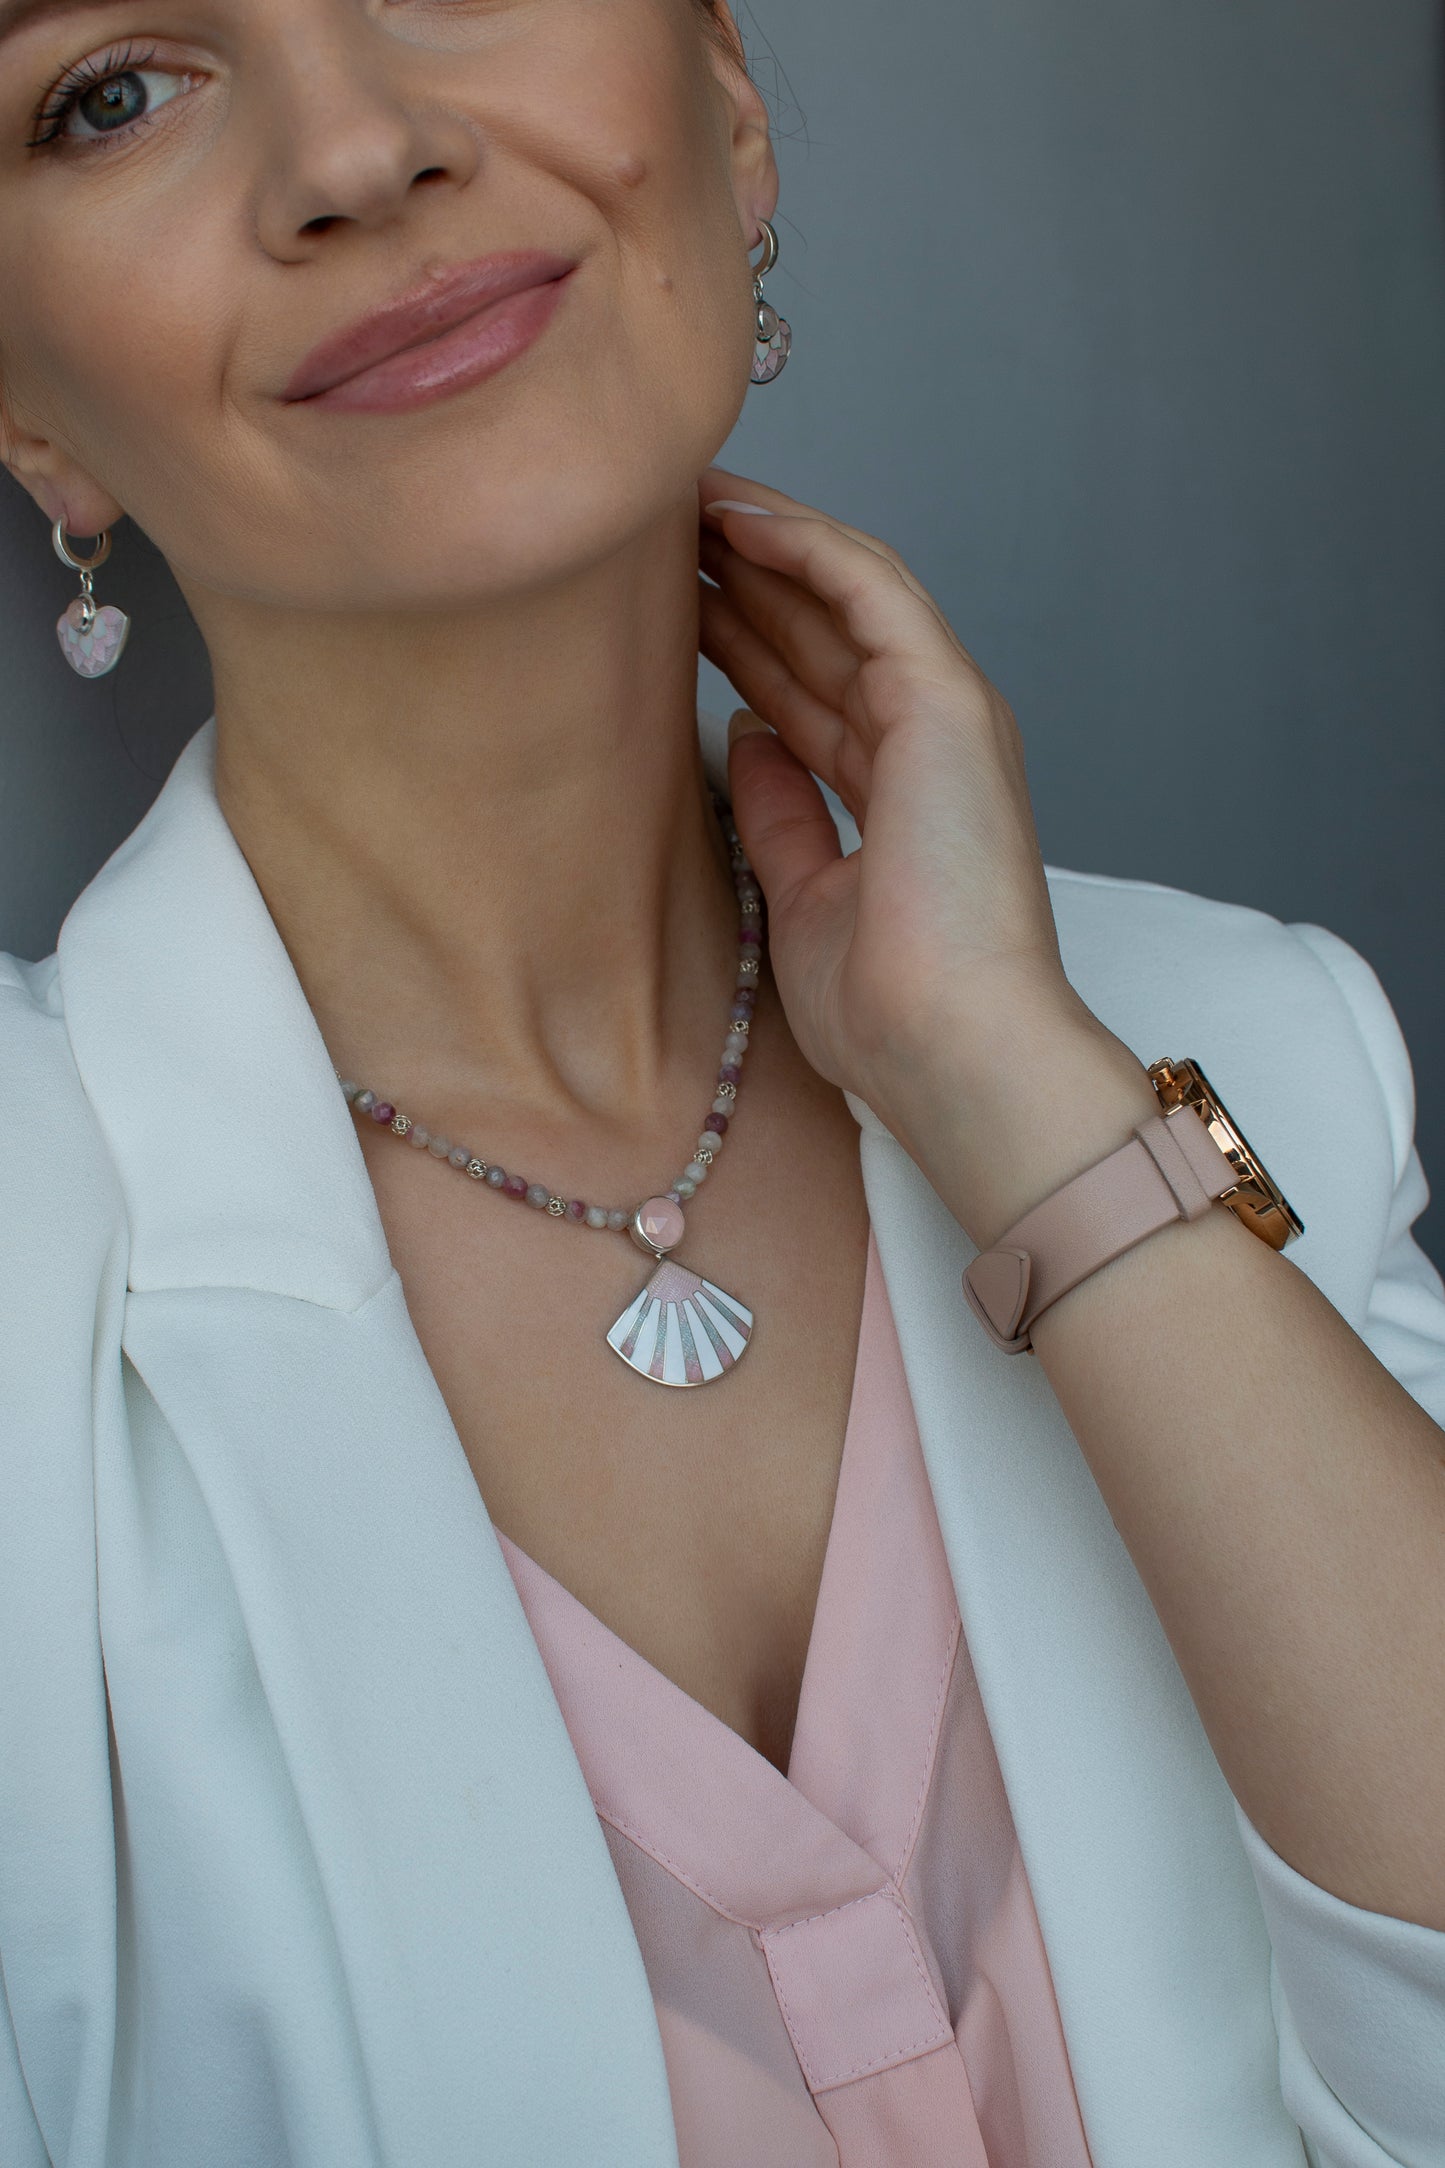 Cloisonne Enamel Earrings With Rose Quartz "Fairytale Pink"